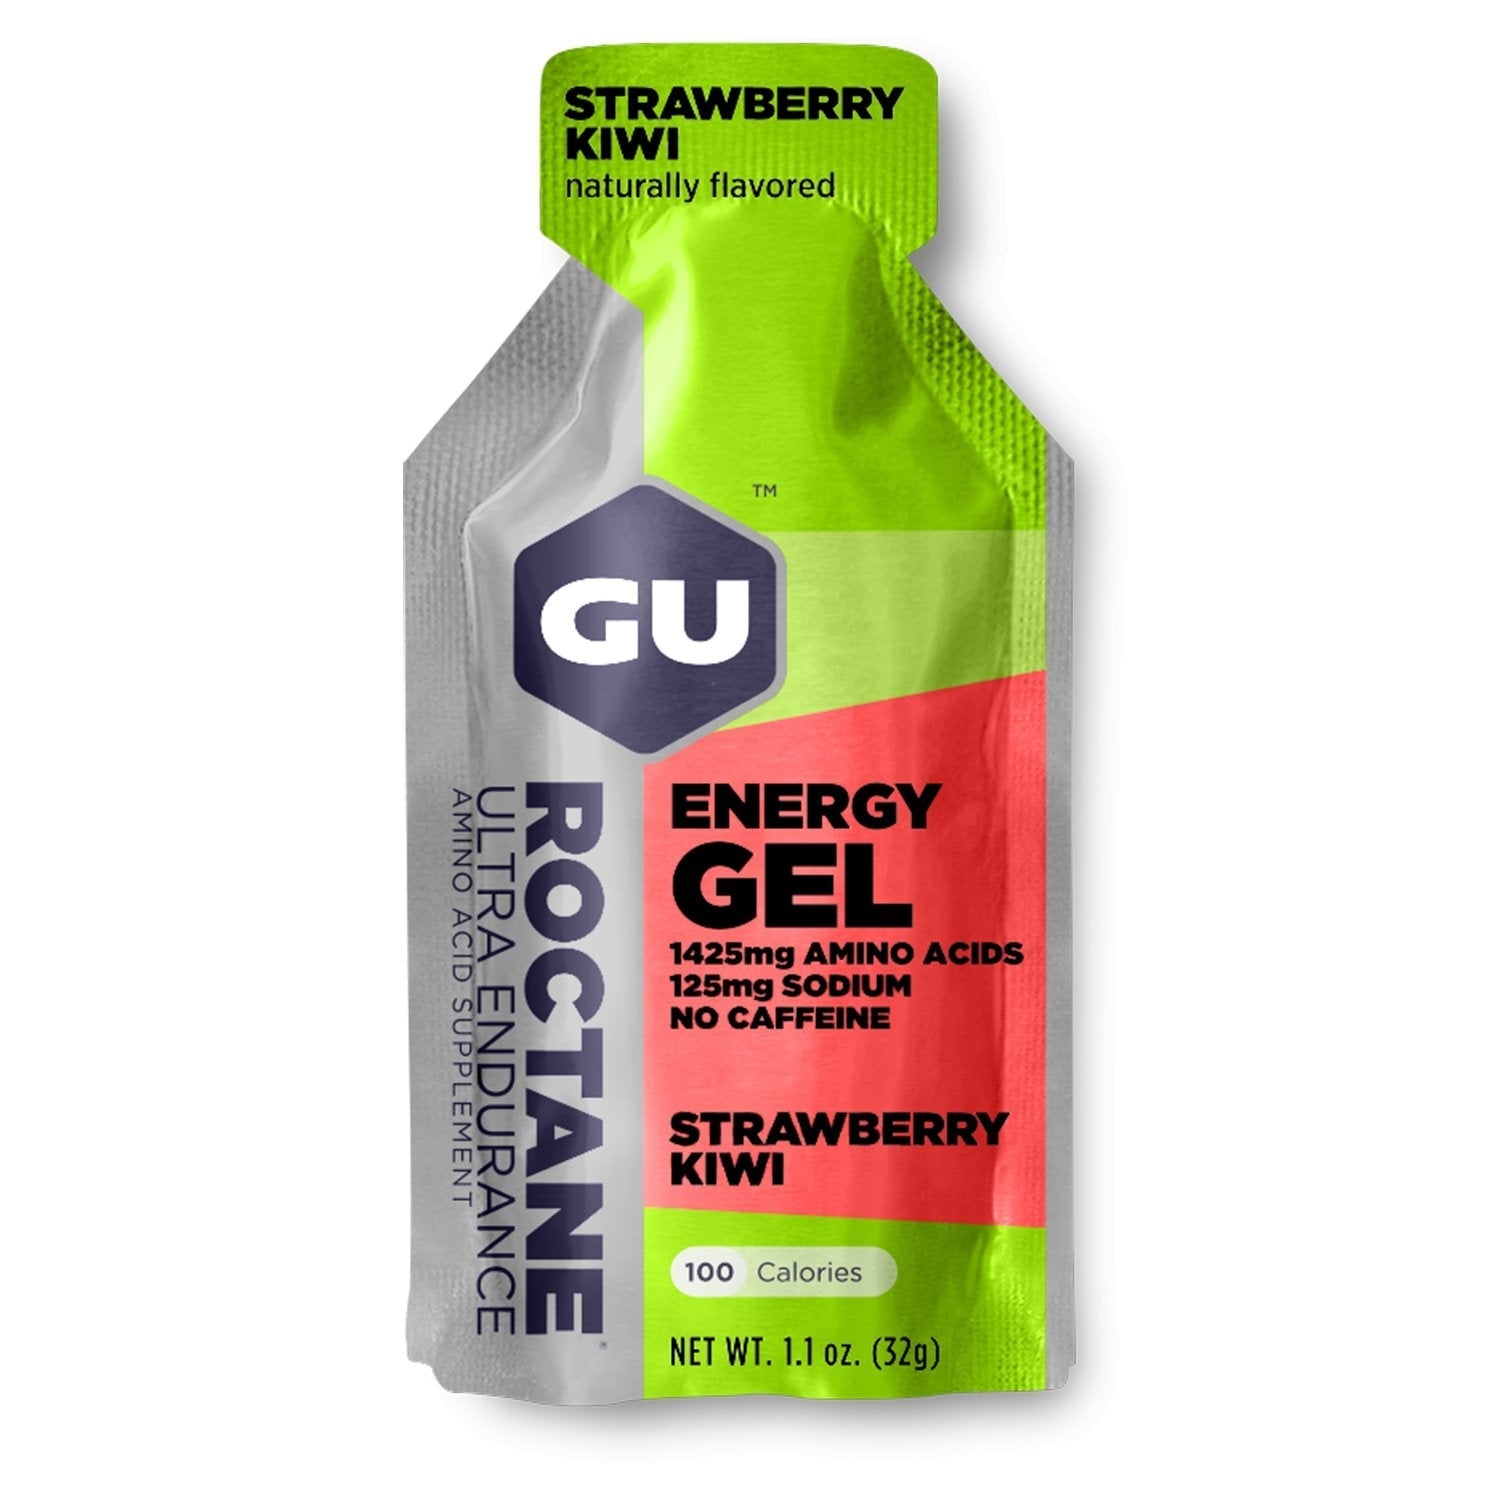 GU Roctance Gel - Strawberry Kiwi - Fuel Goods